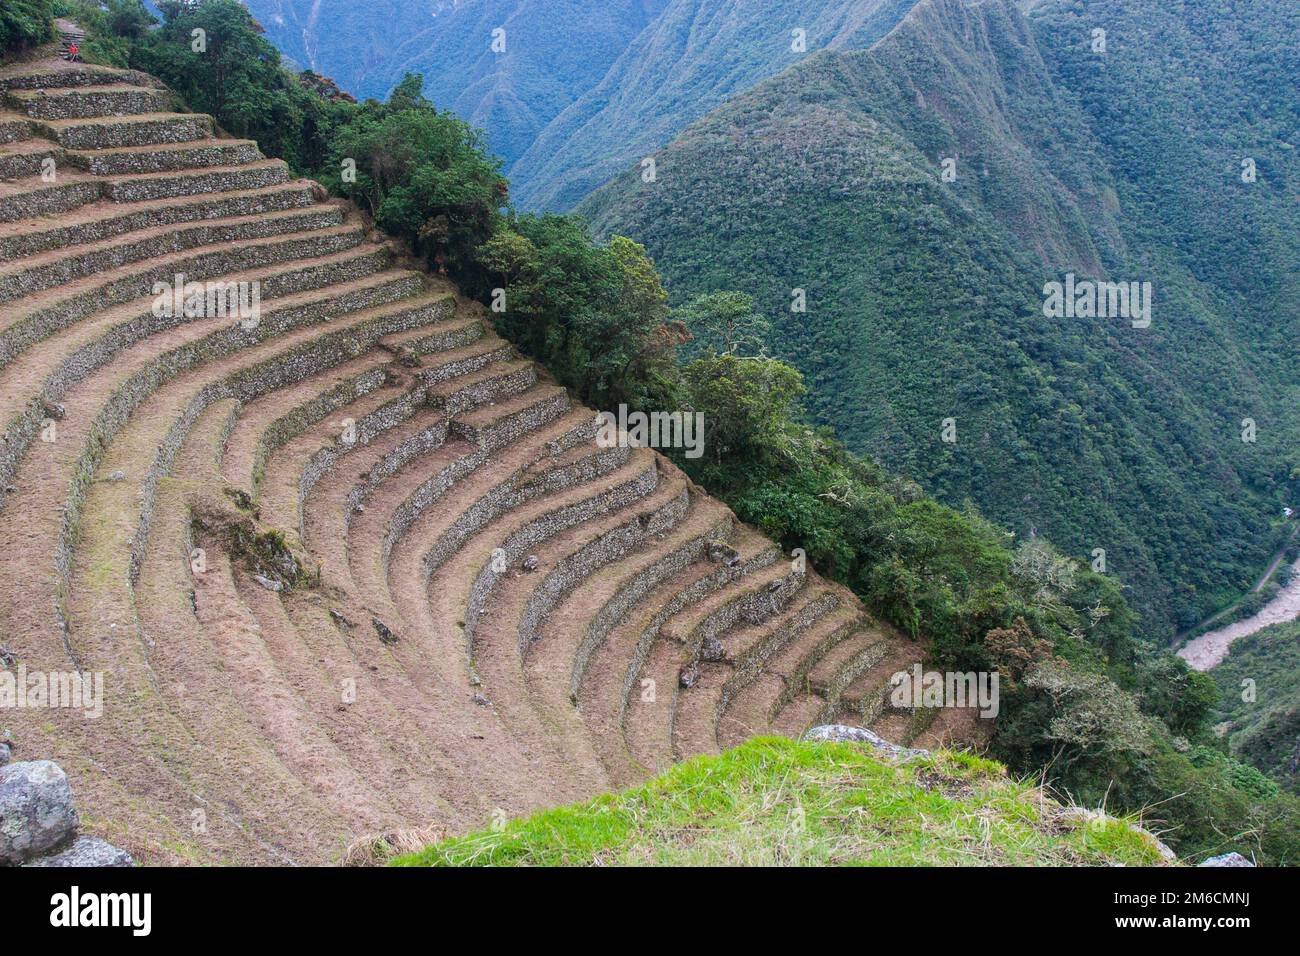 Ancient Inca stone farming terraces. Inca Trail, Peru. Stock Photo